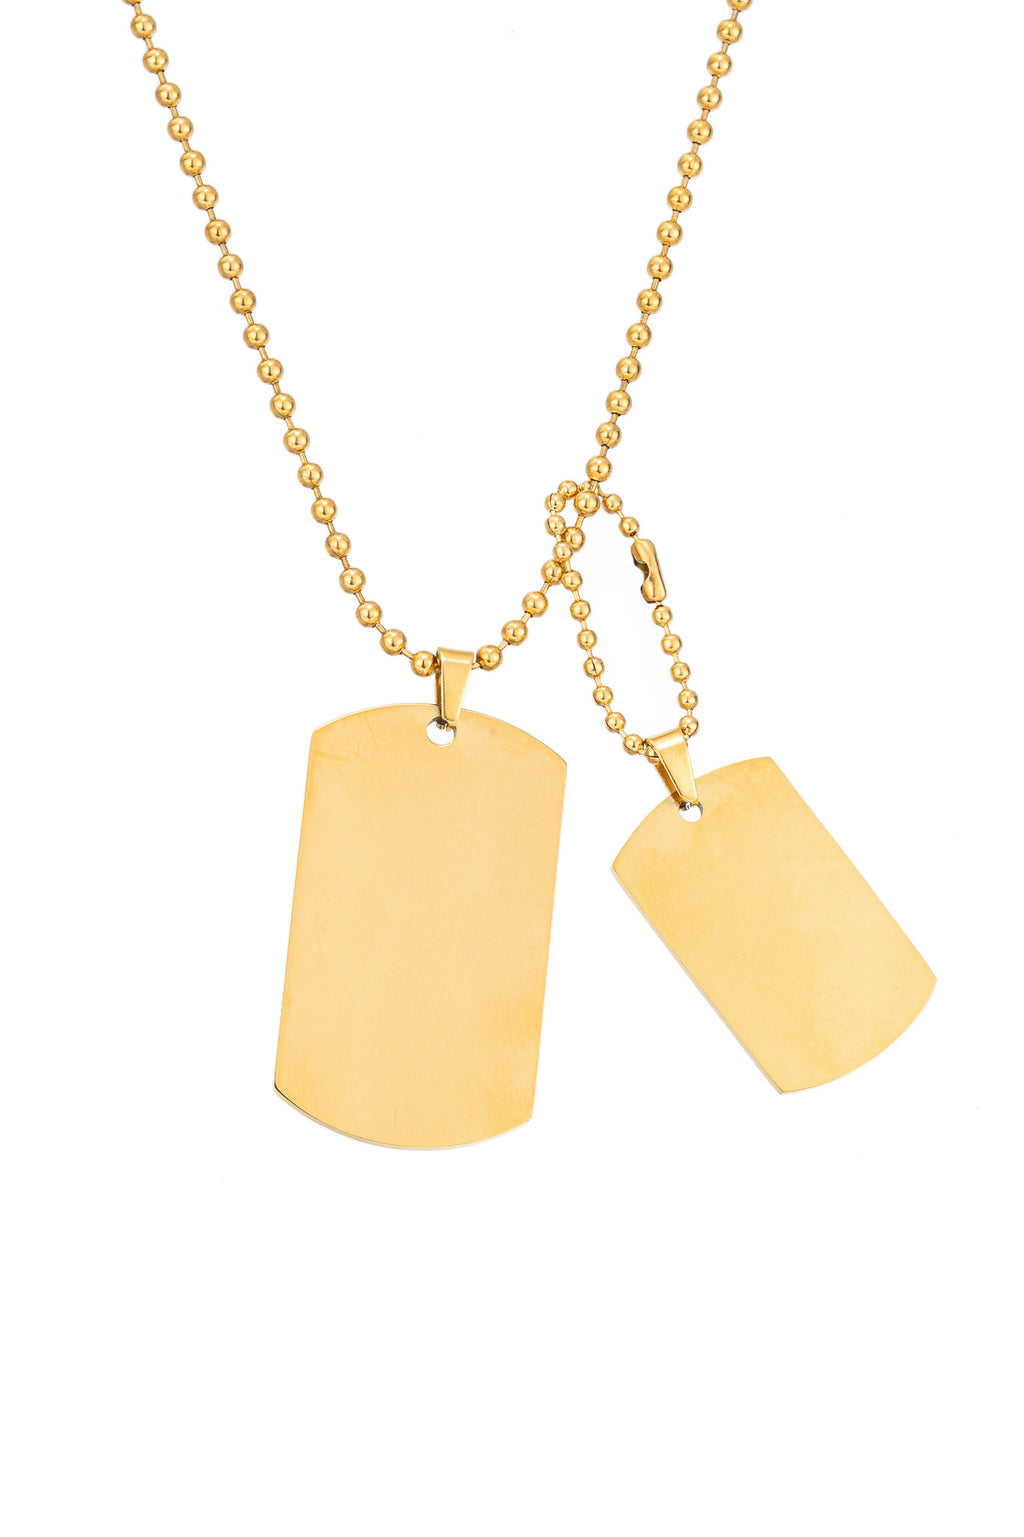 Gold tone titanium dog tag necklace.